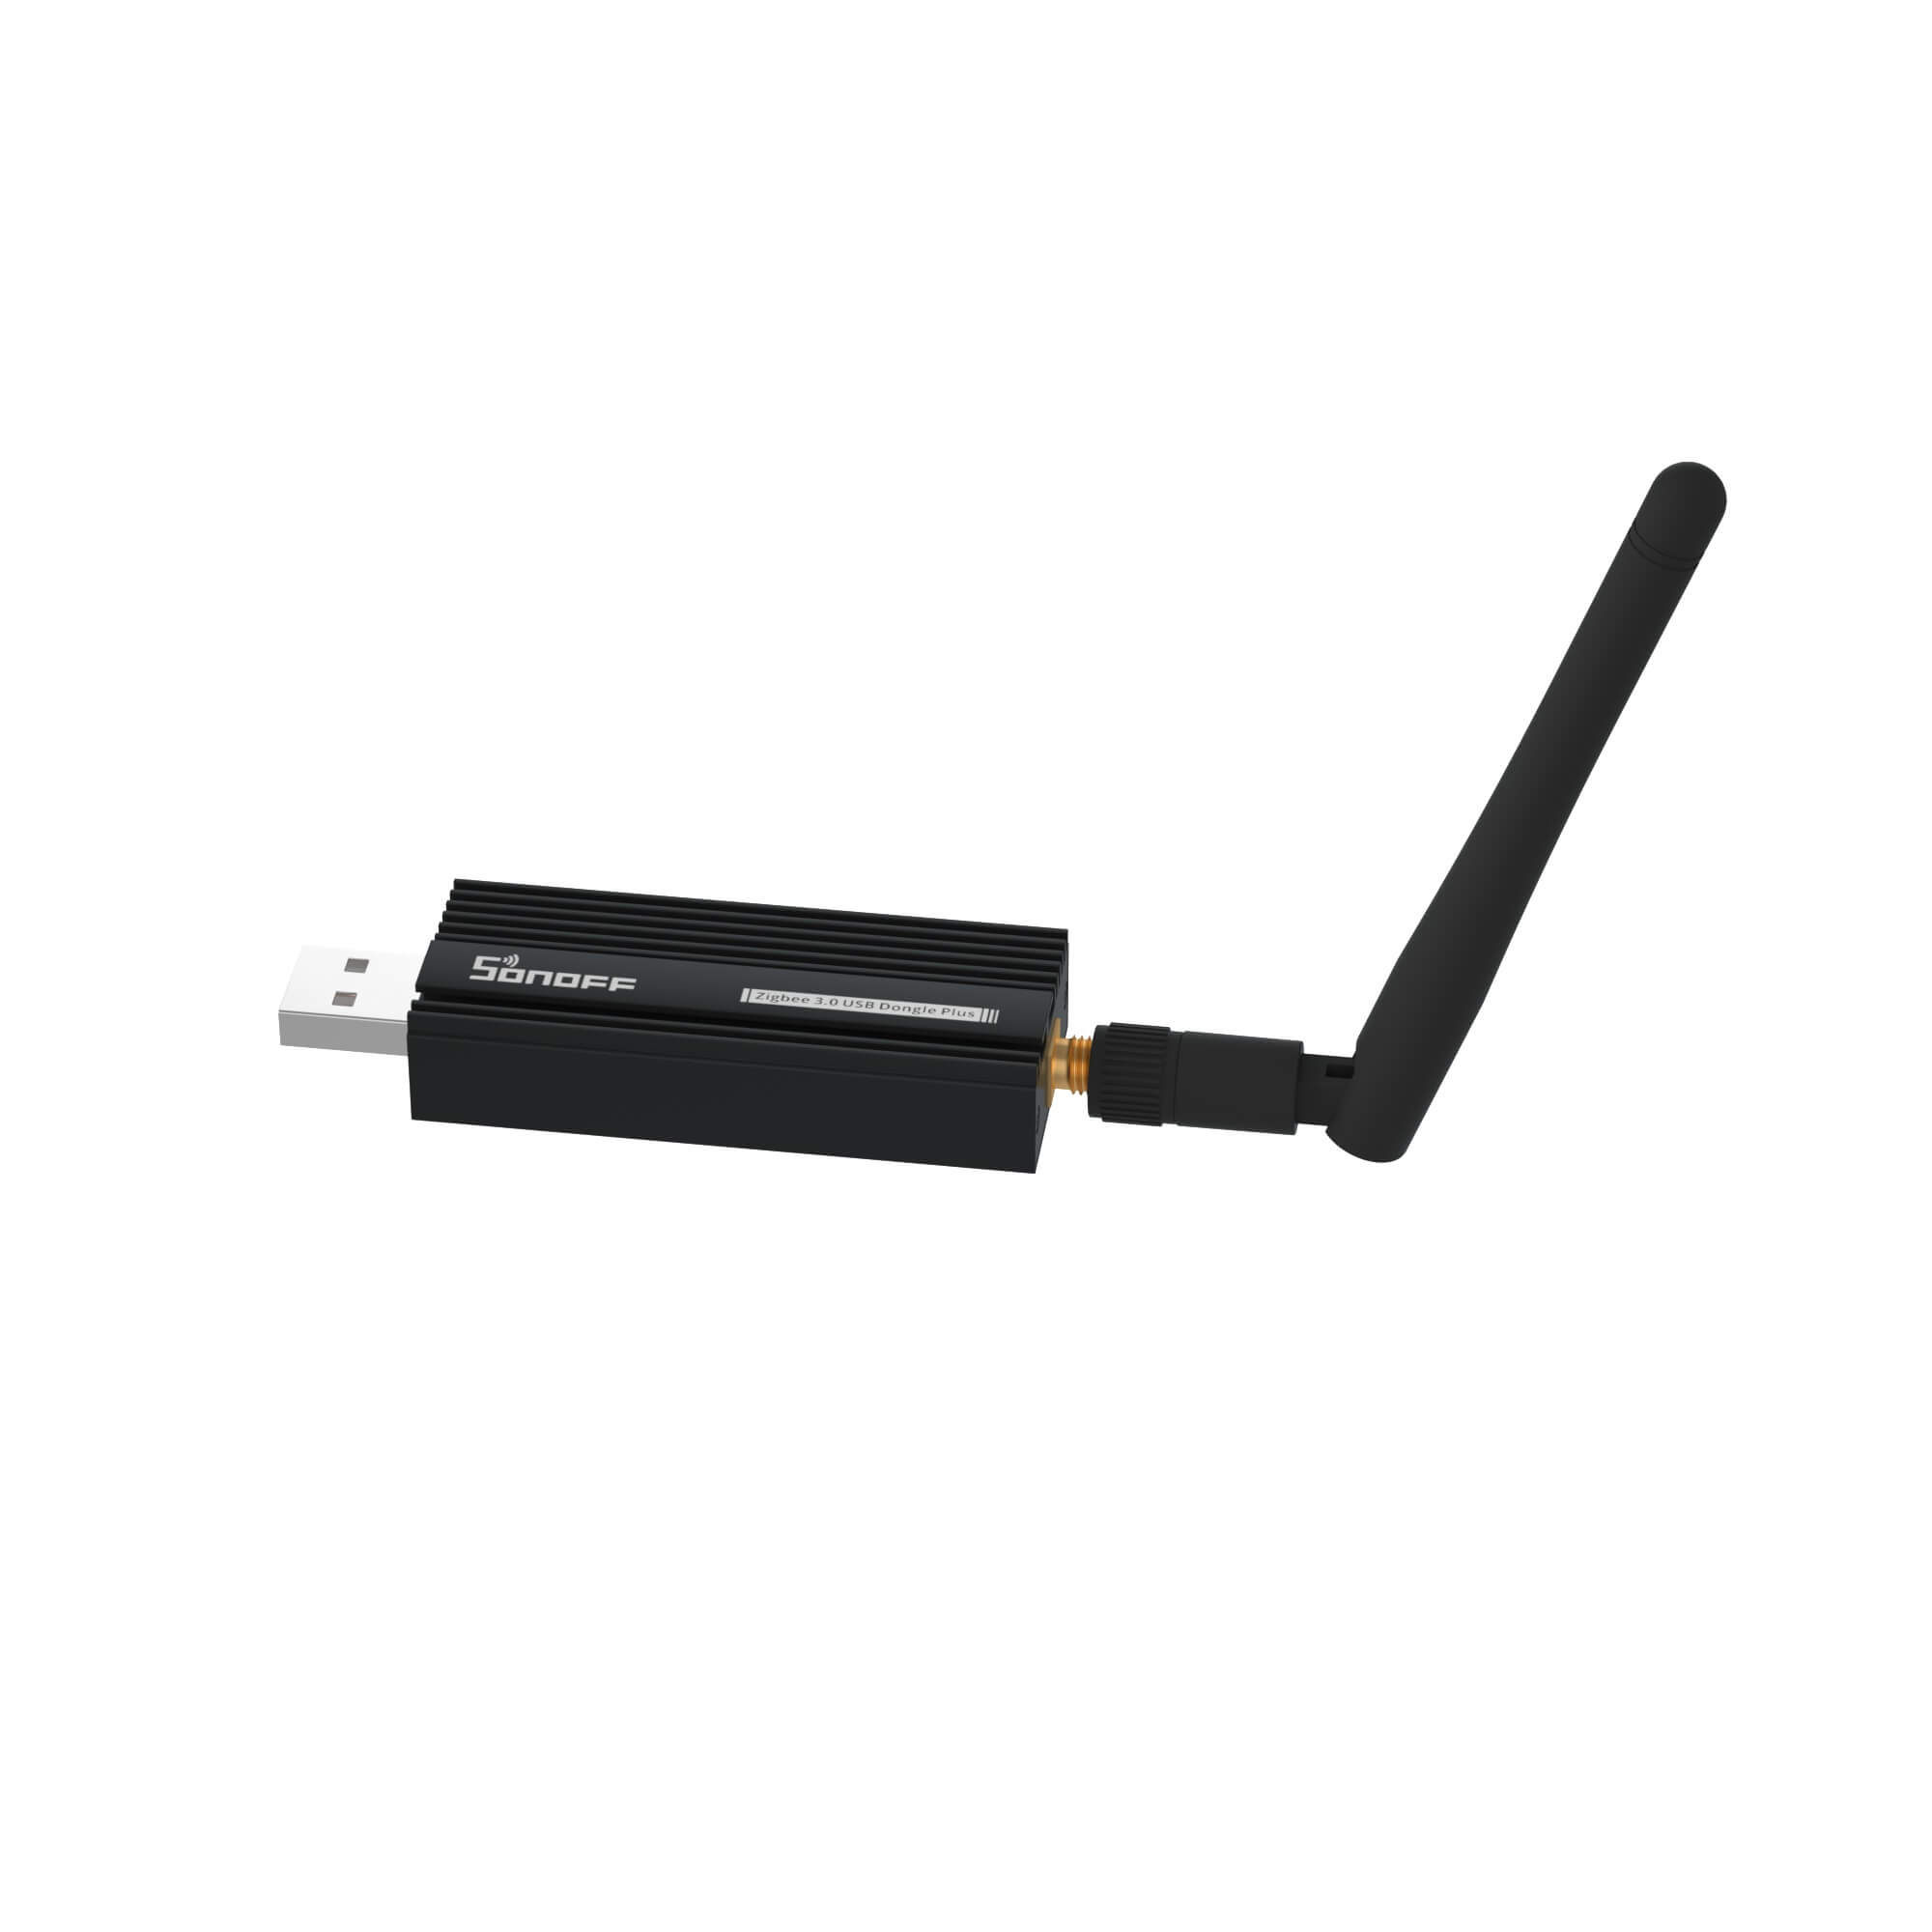 SONOFF Zigbee 3.0 USB Dongle Plus E — ameriDroid